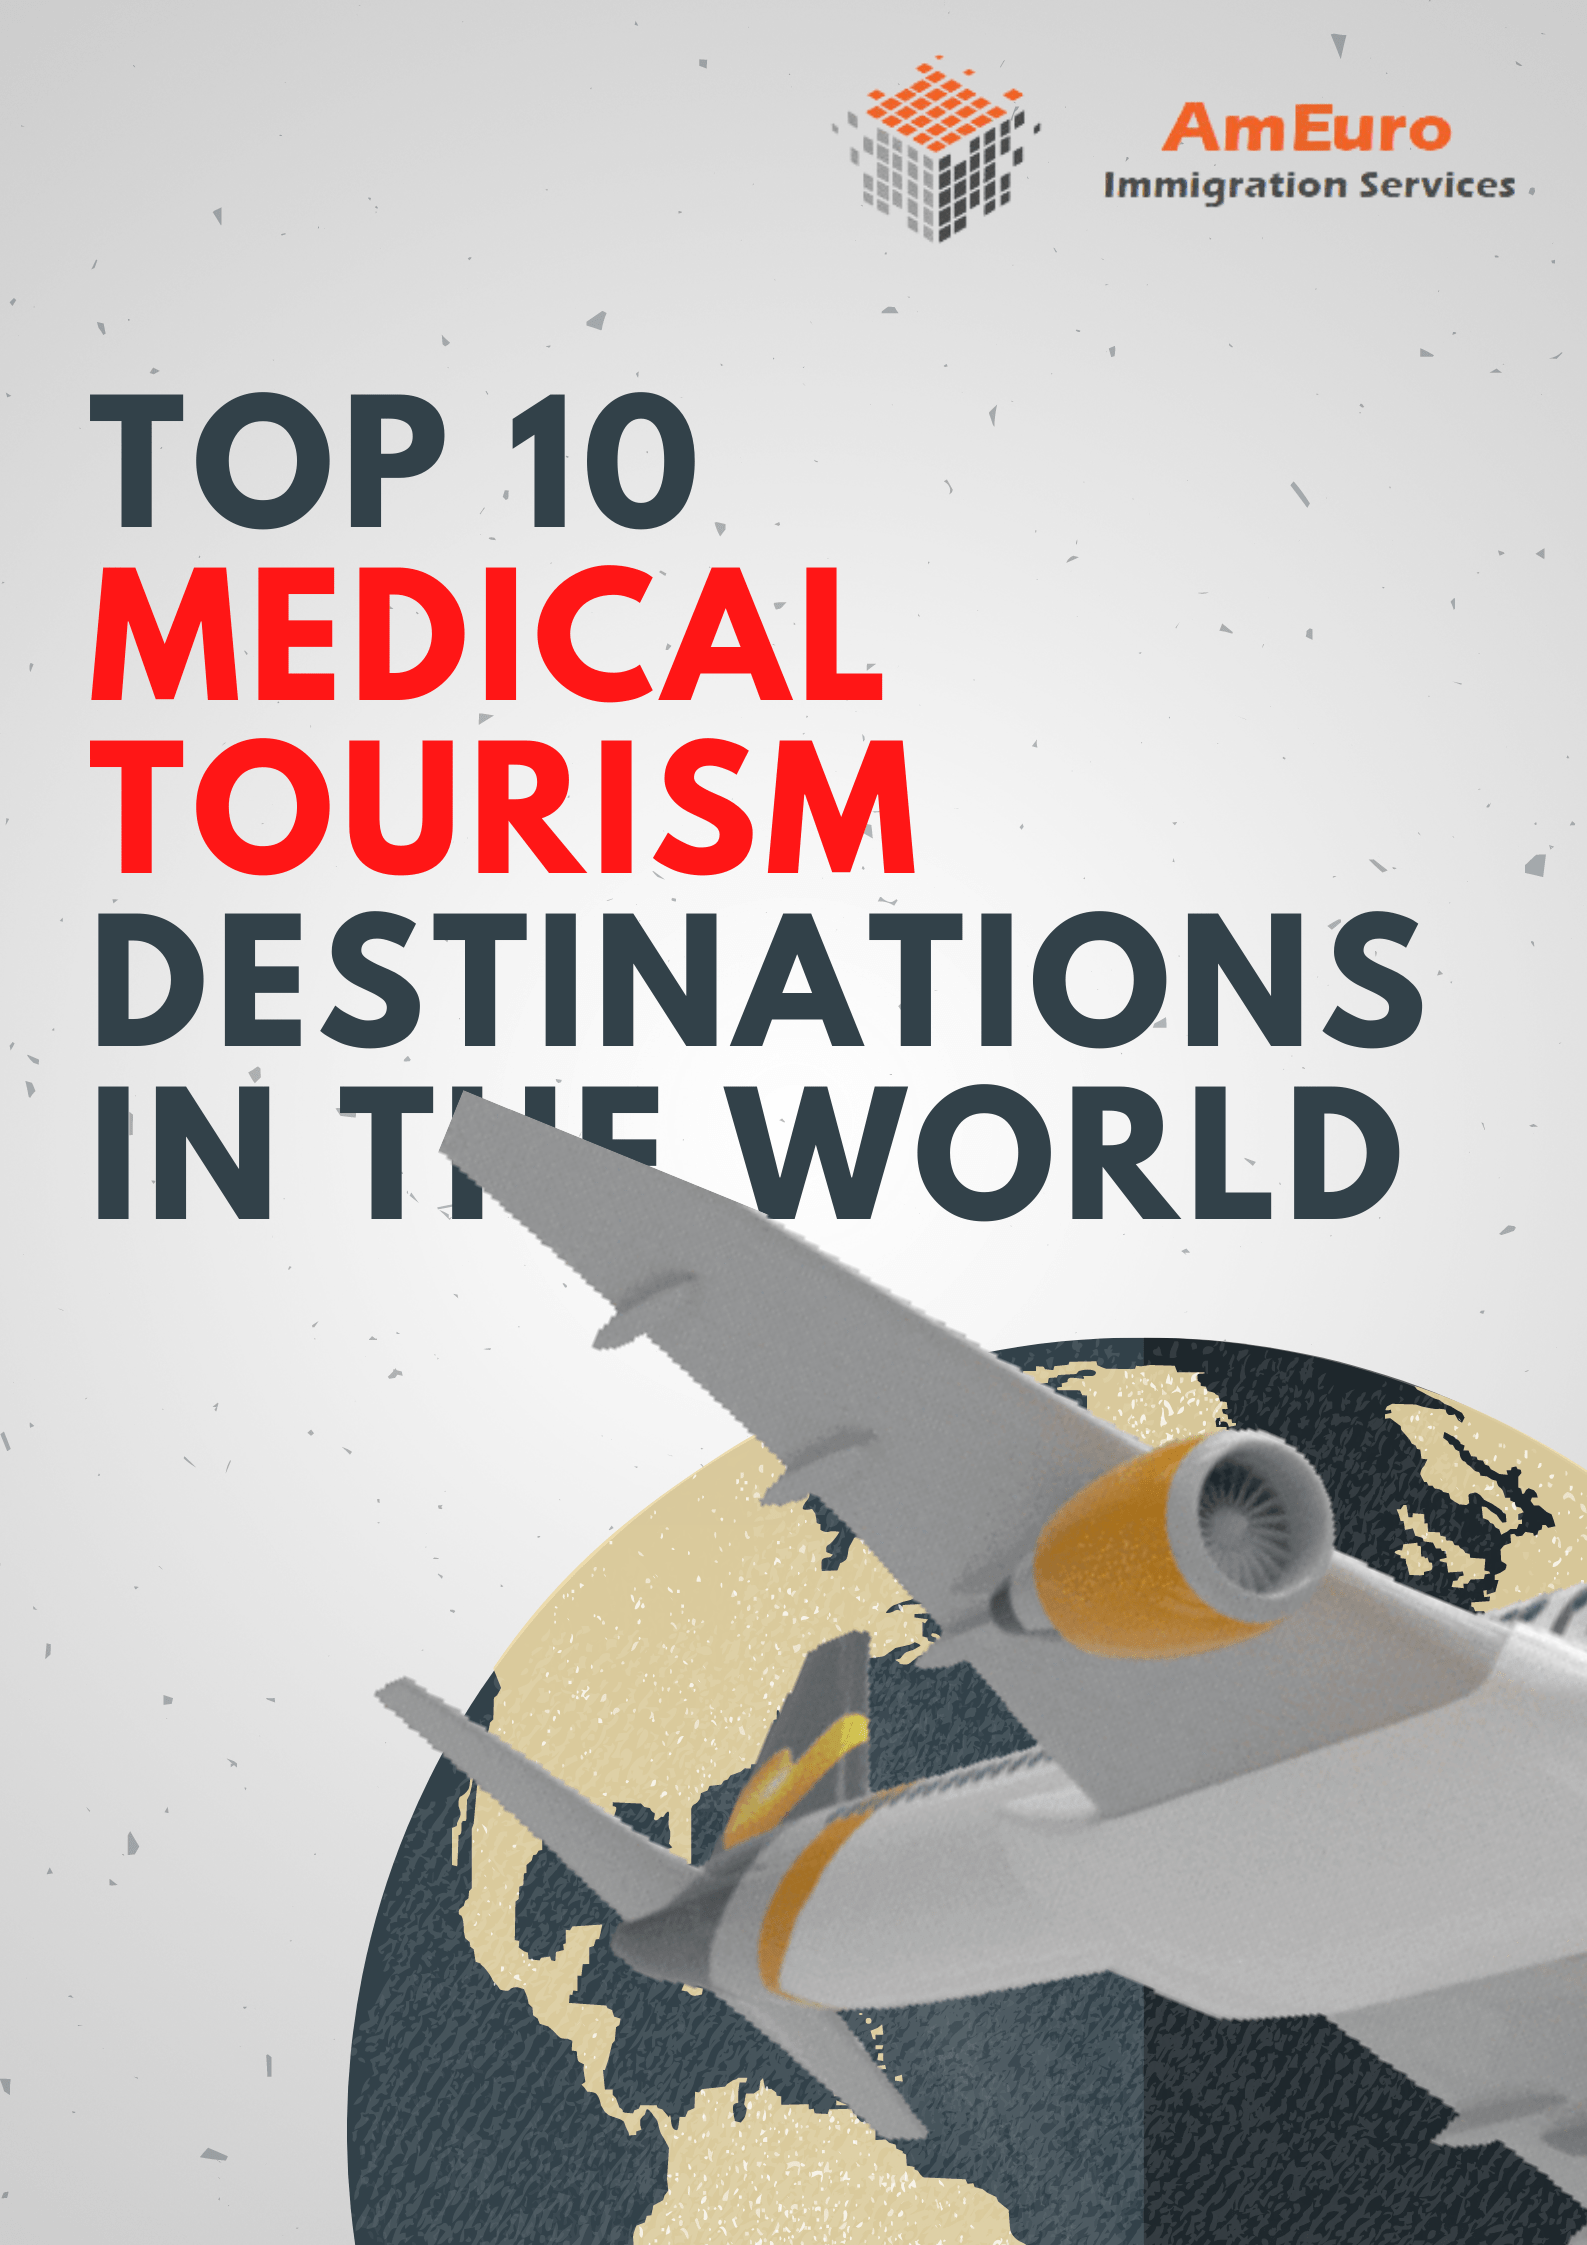 international medical tourism